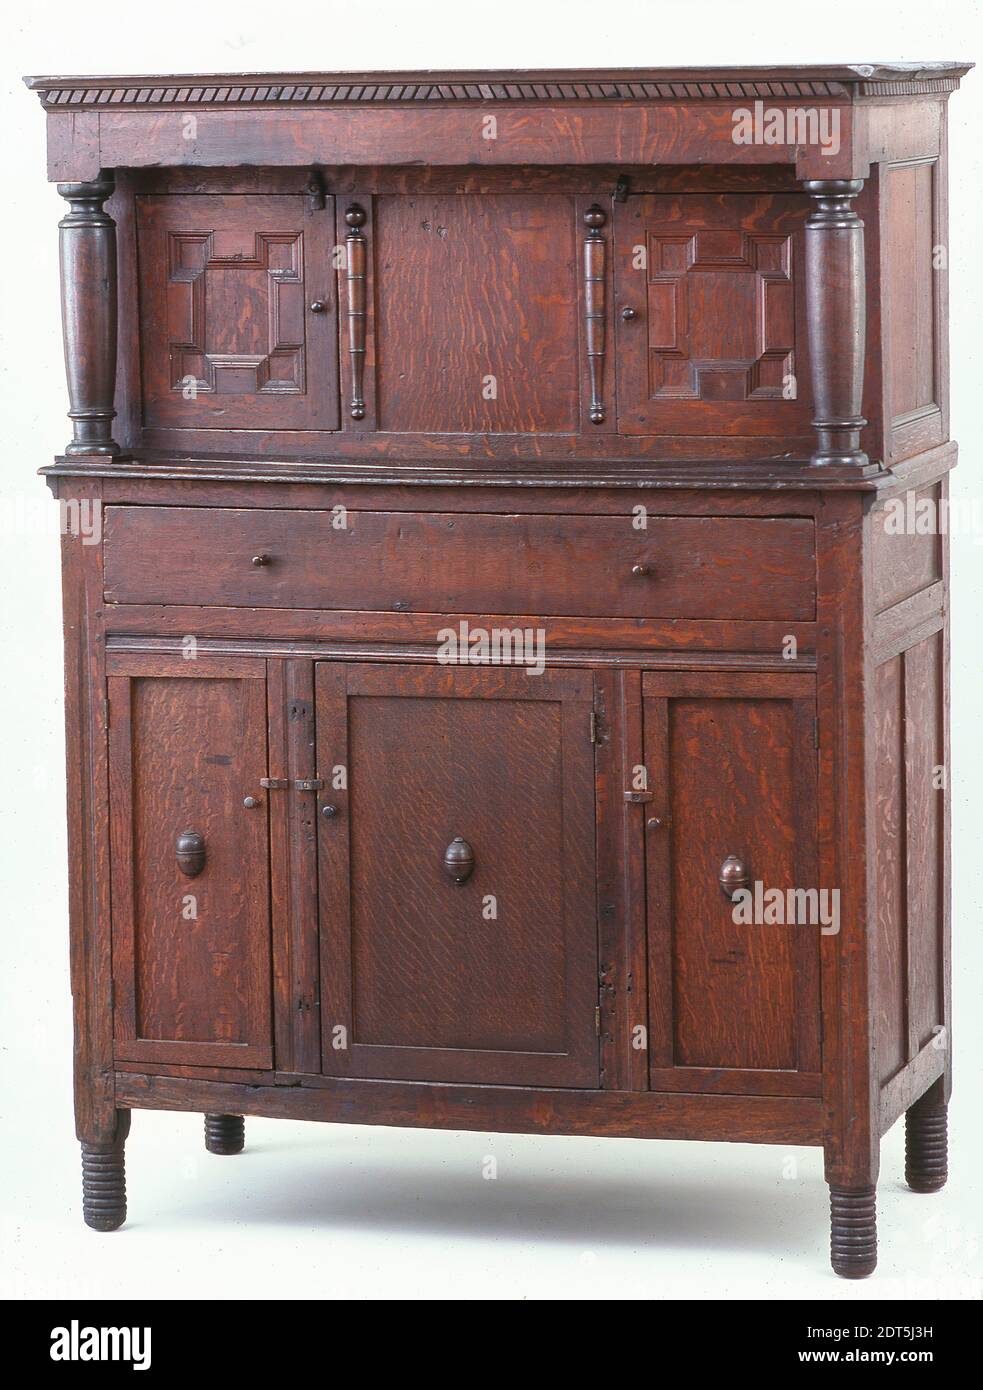 Cupboard, Oak, cedar, pine, maple, English elm, 60 3/4 × 45 7/8 × 22 5/8 in. (154.3 × 116.5 × 57.5 cm), Probably British, 17th century, Furniture Stock Photo